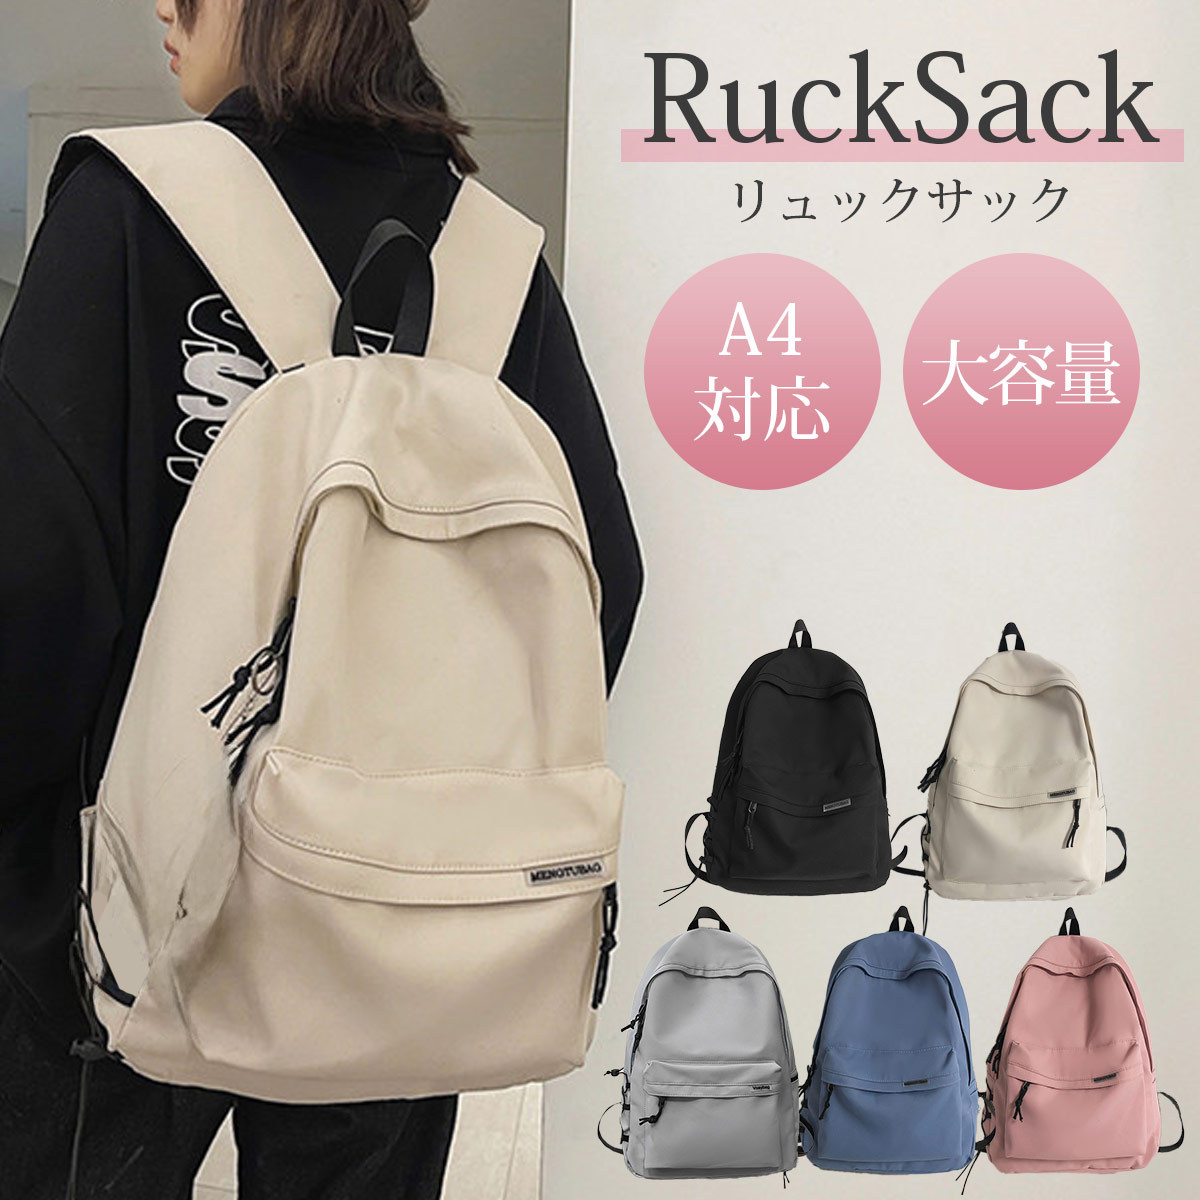  rucksack rucksack bag personal computer bag lady's 40 fee 50 fee Korea men's commuting going to school travel casual outdoor 